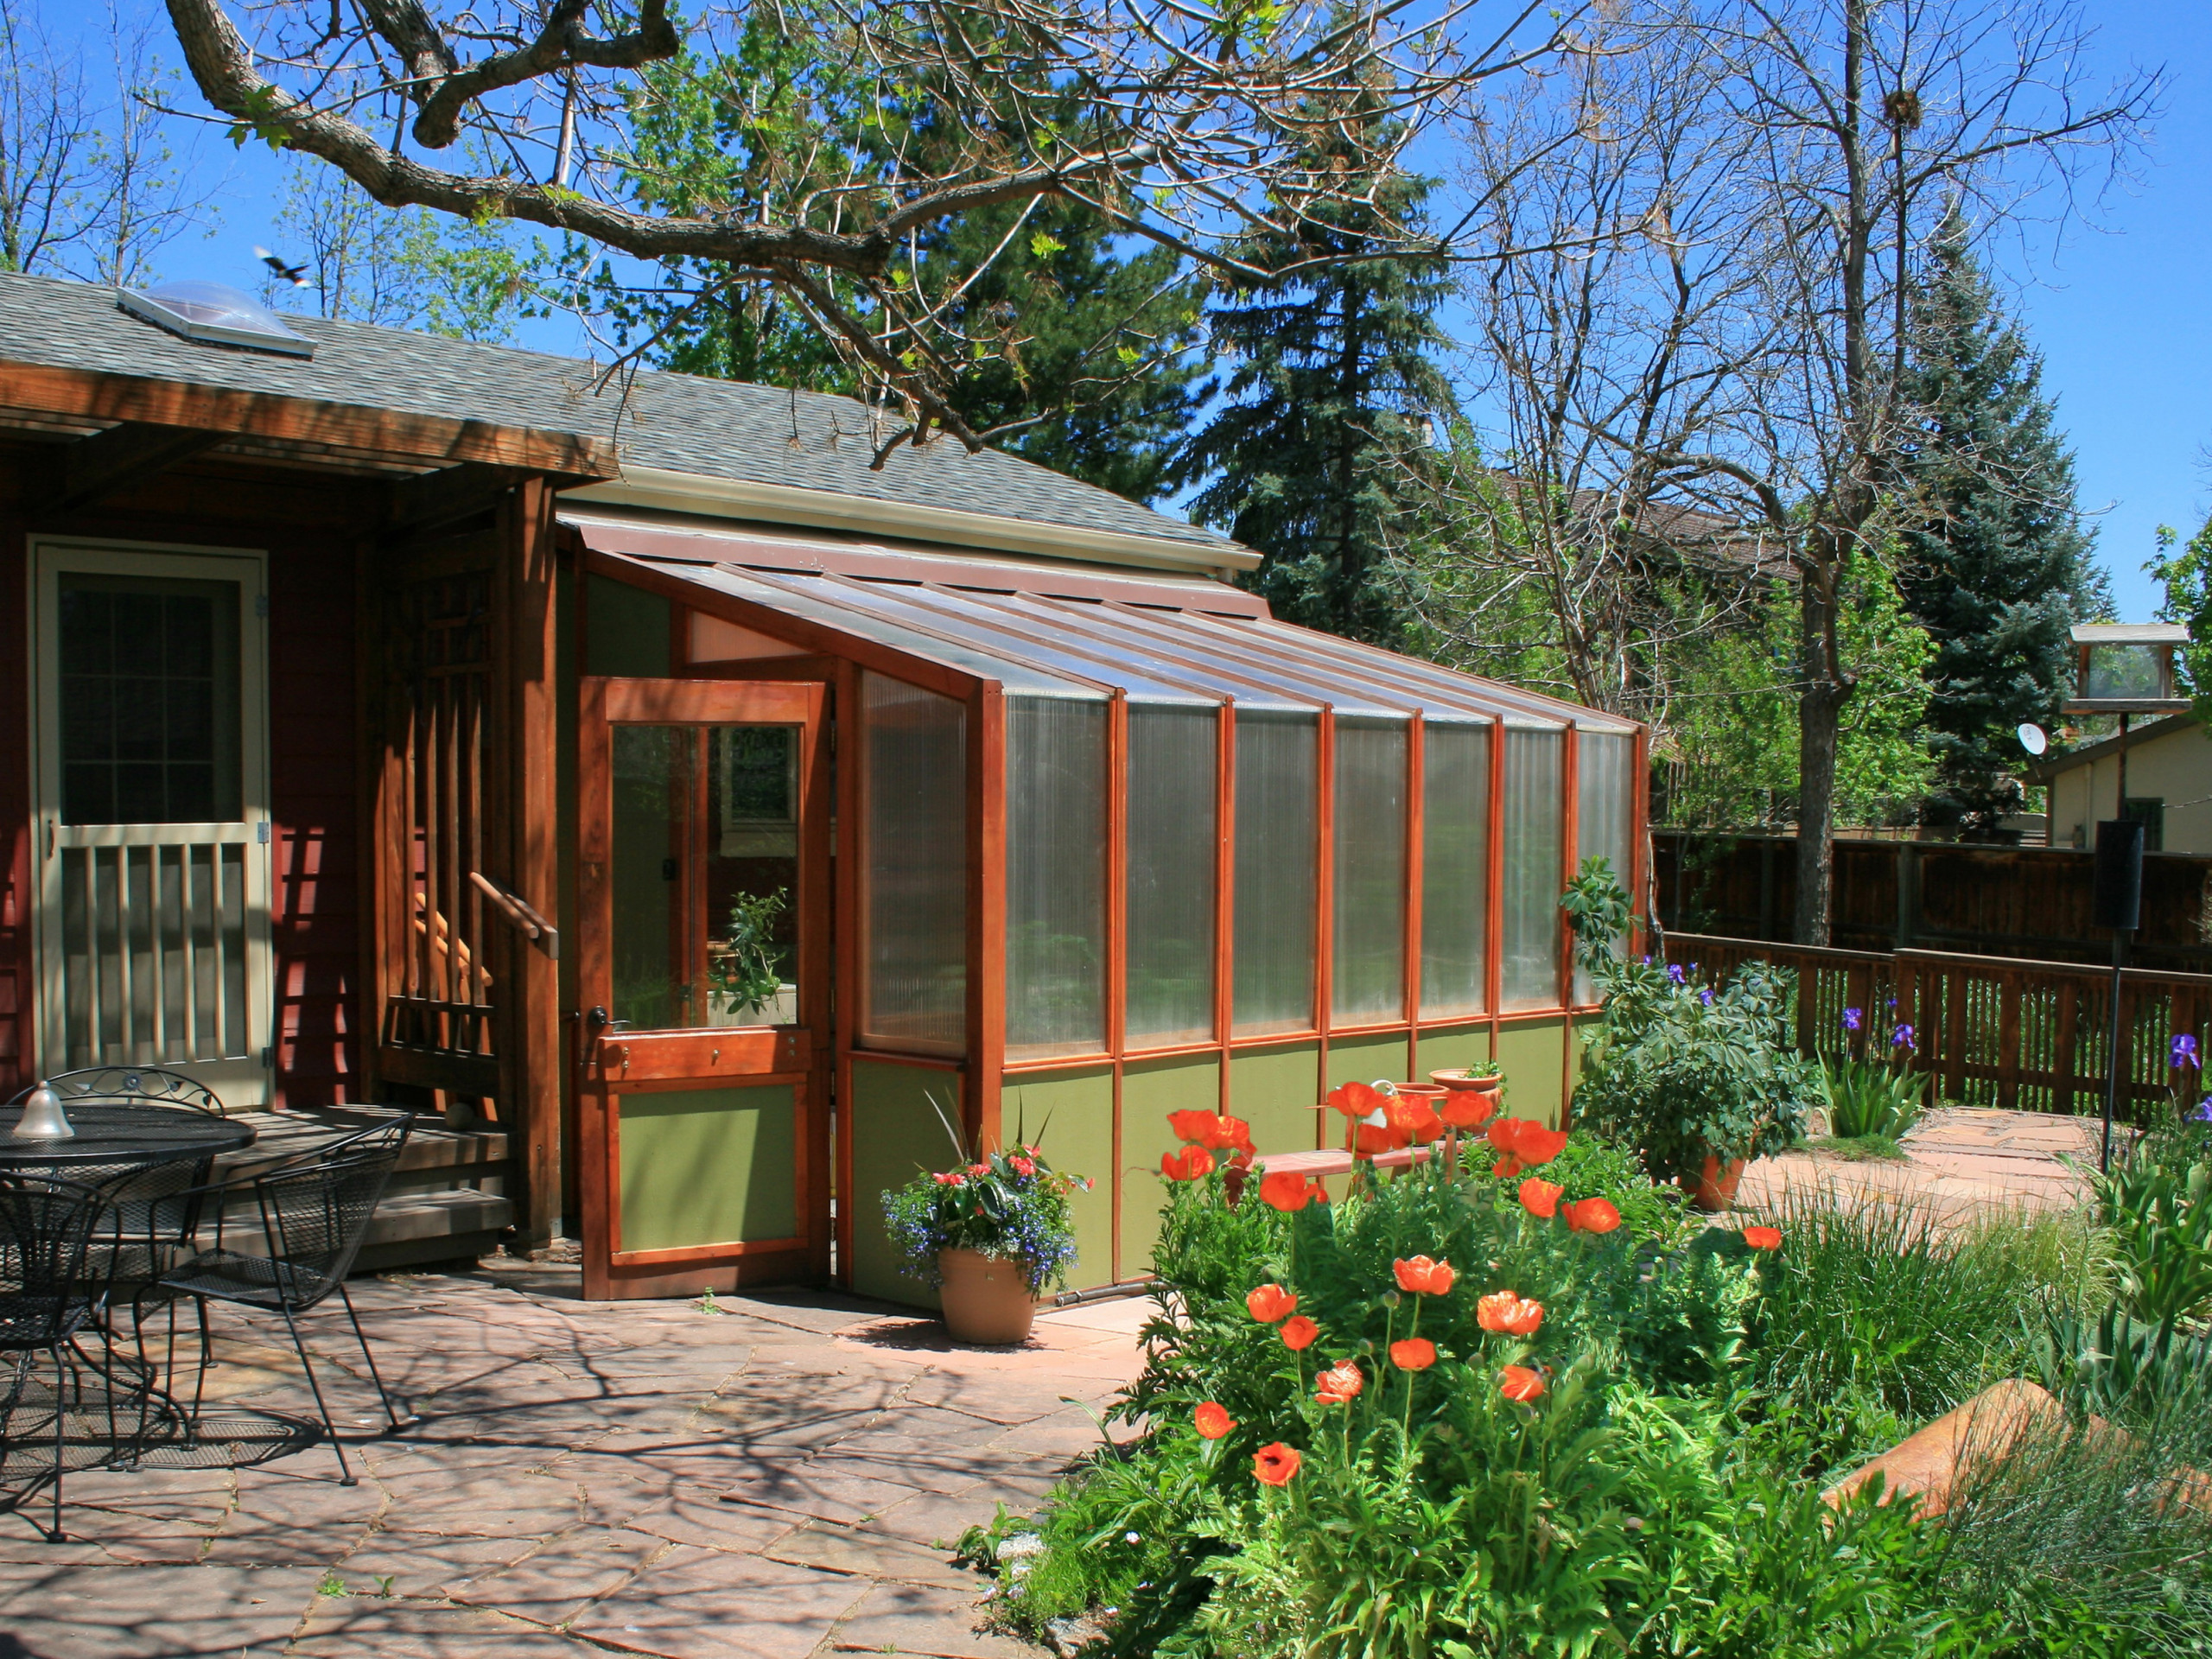 Install a passive solar greenhouse